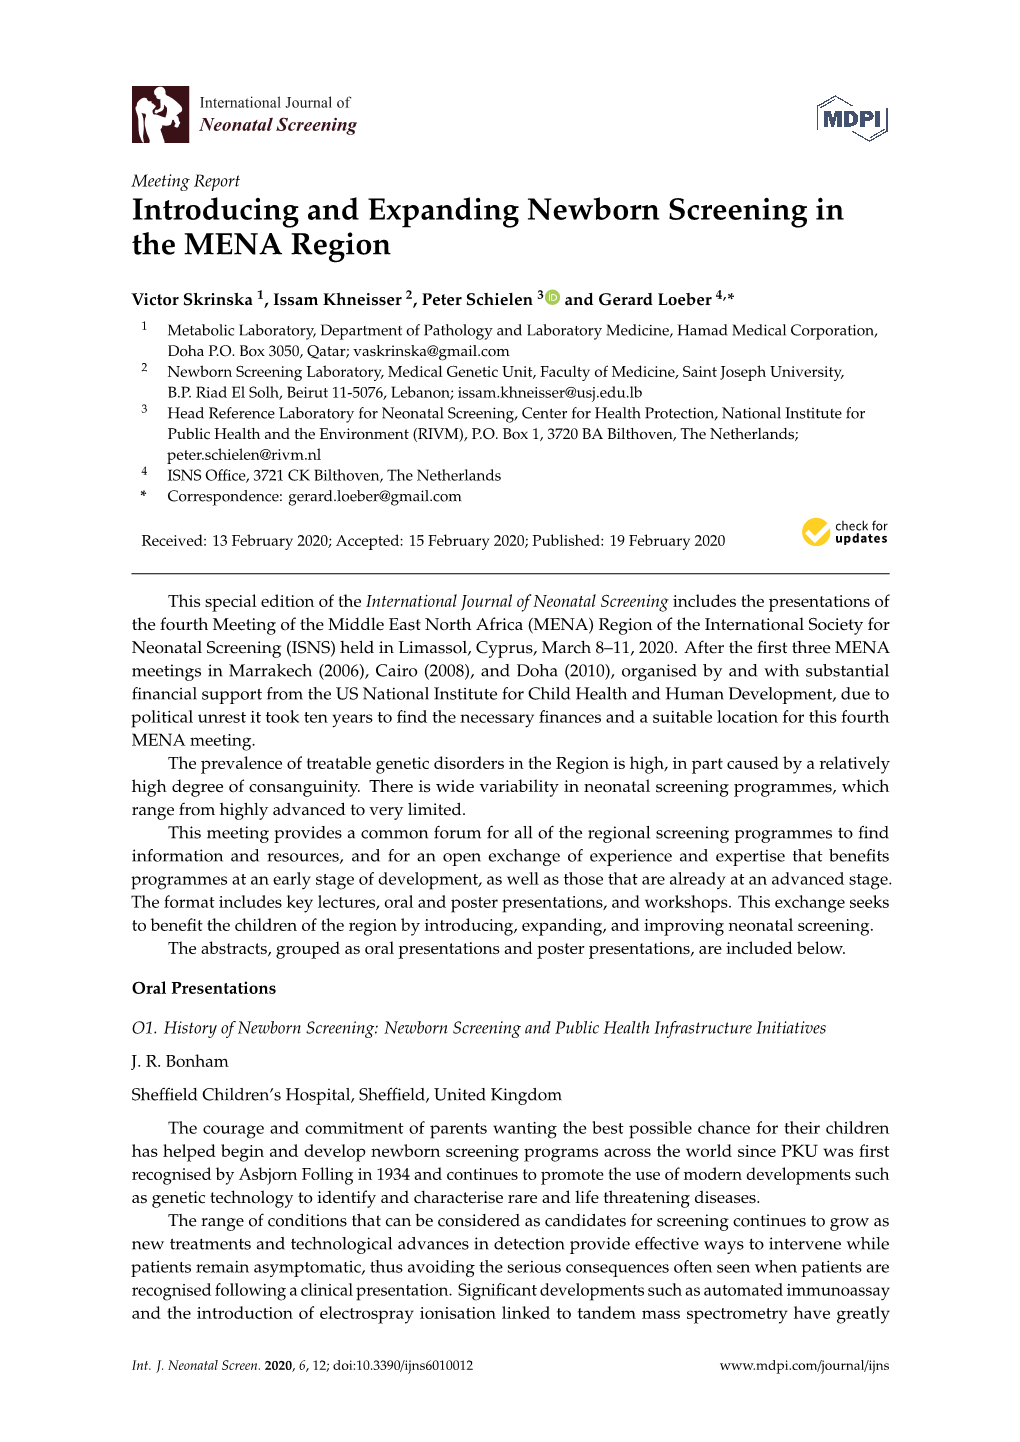 Introducing and Expanding Newborn Screening in the MENA Region